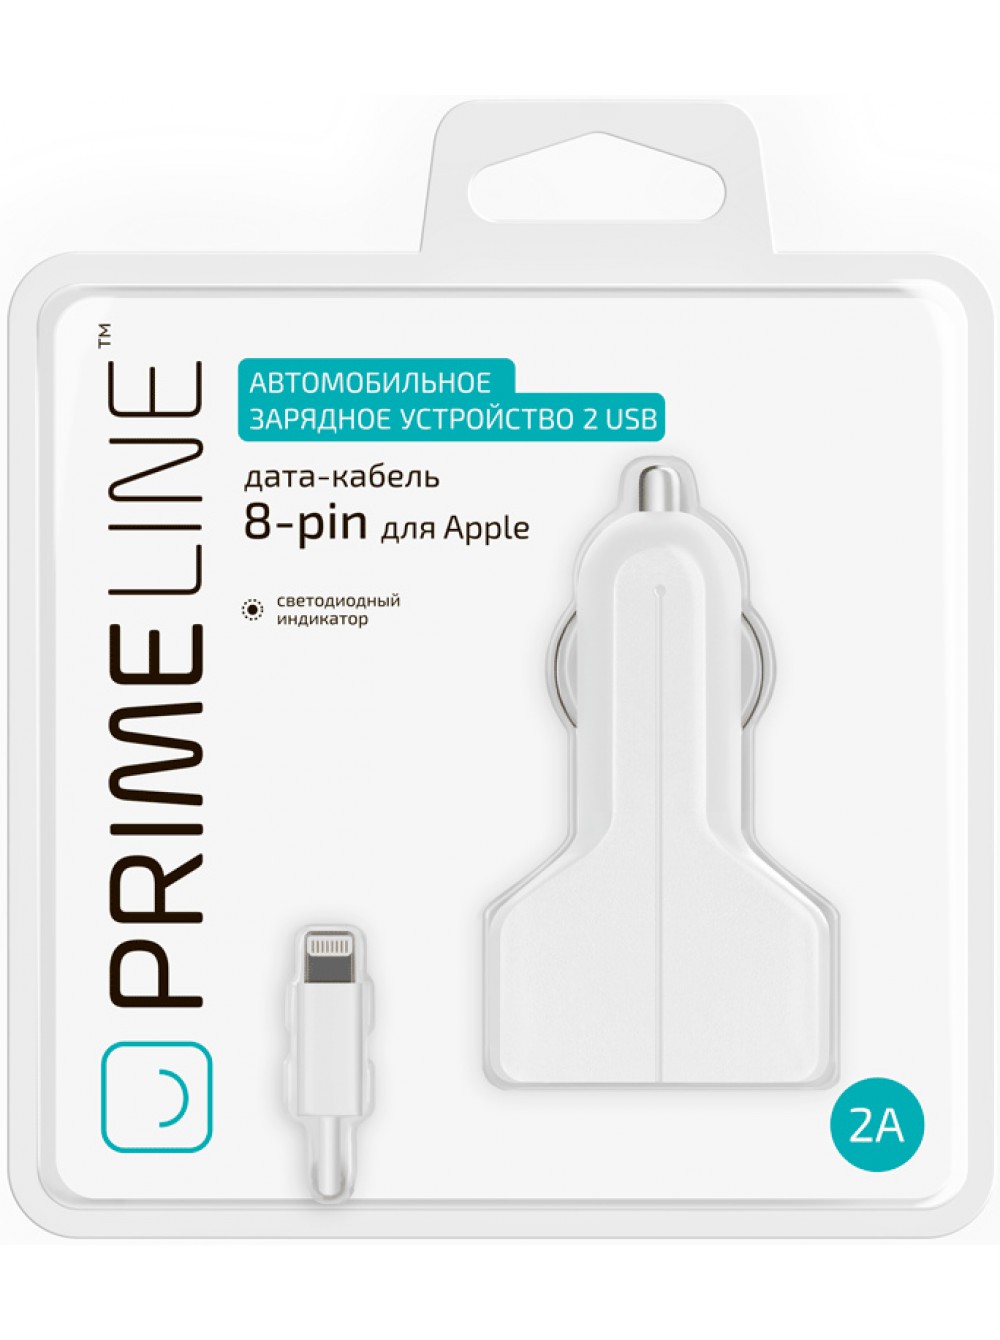 АЗУ-2USB Prime Line 2.1A + кабель 8 pin Apple, белый, 2215.